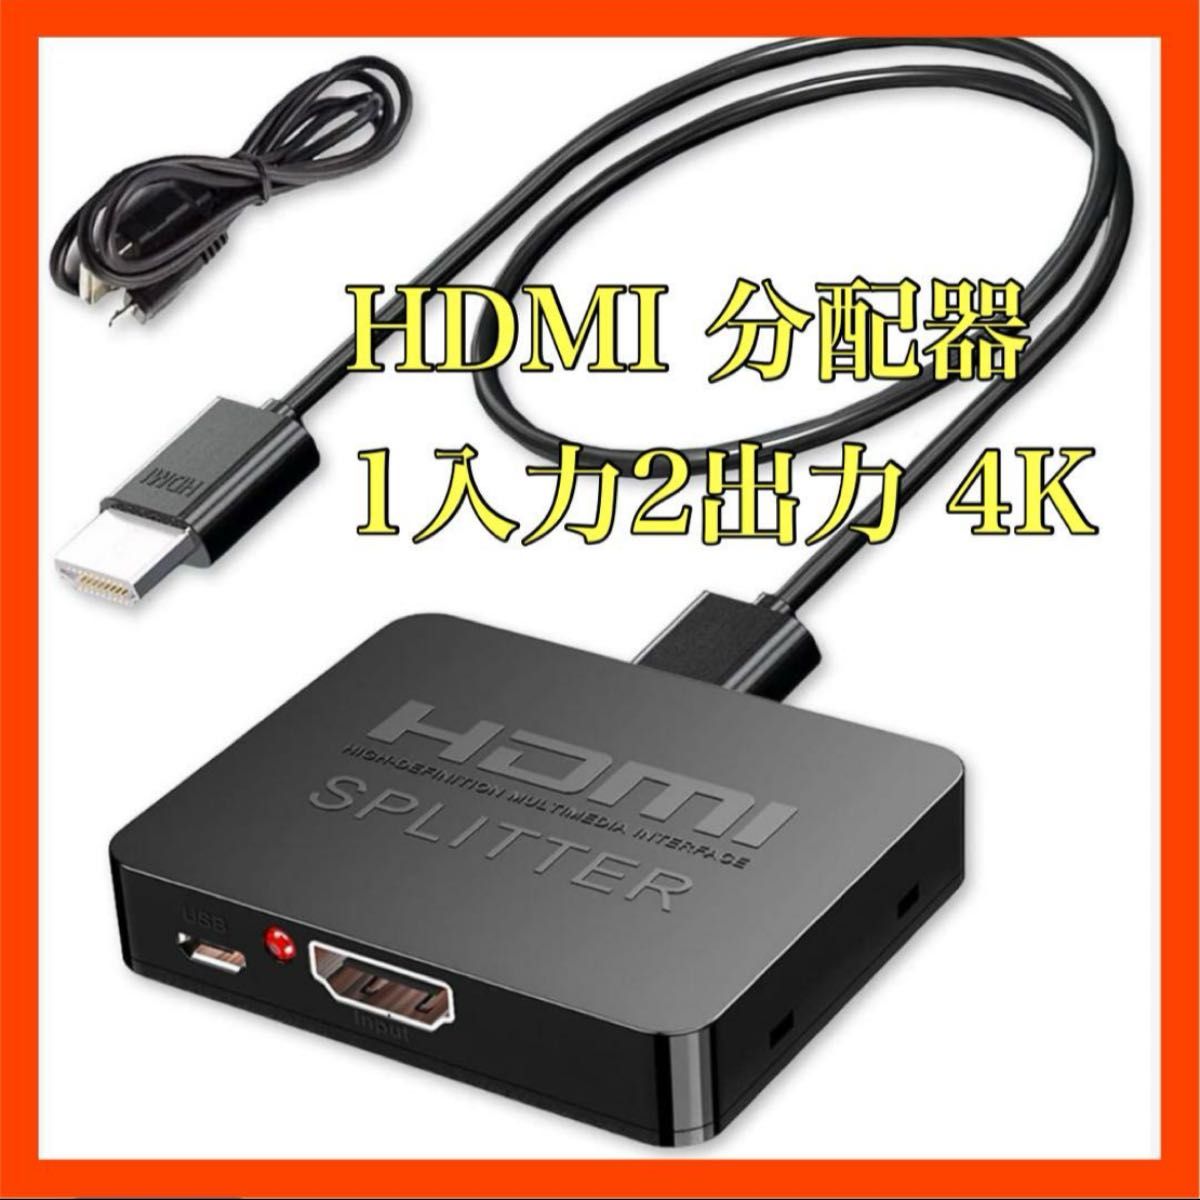 HDMI分配器 1入力2出力 4K スプリッター 3D 1080p HDMI1.4 PS5 Xbox HDTV DVD 対応